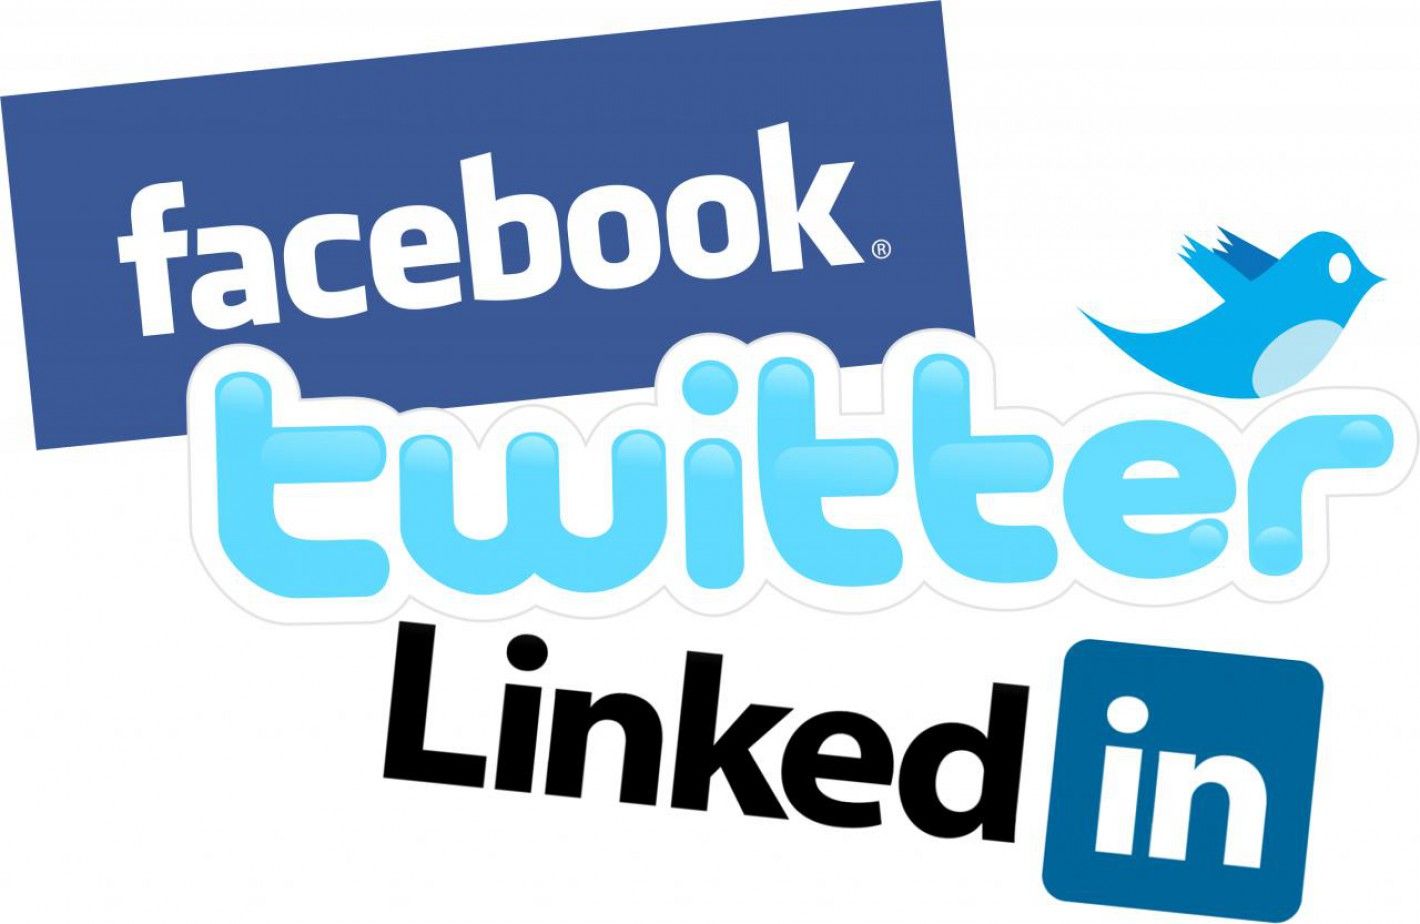 cambiar correo electronico Twitter, Facebook, LinkedIn